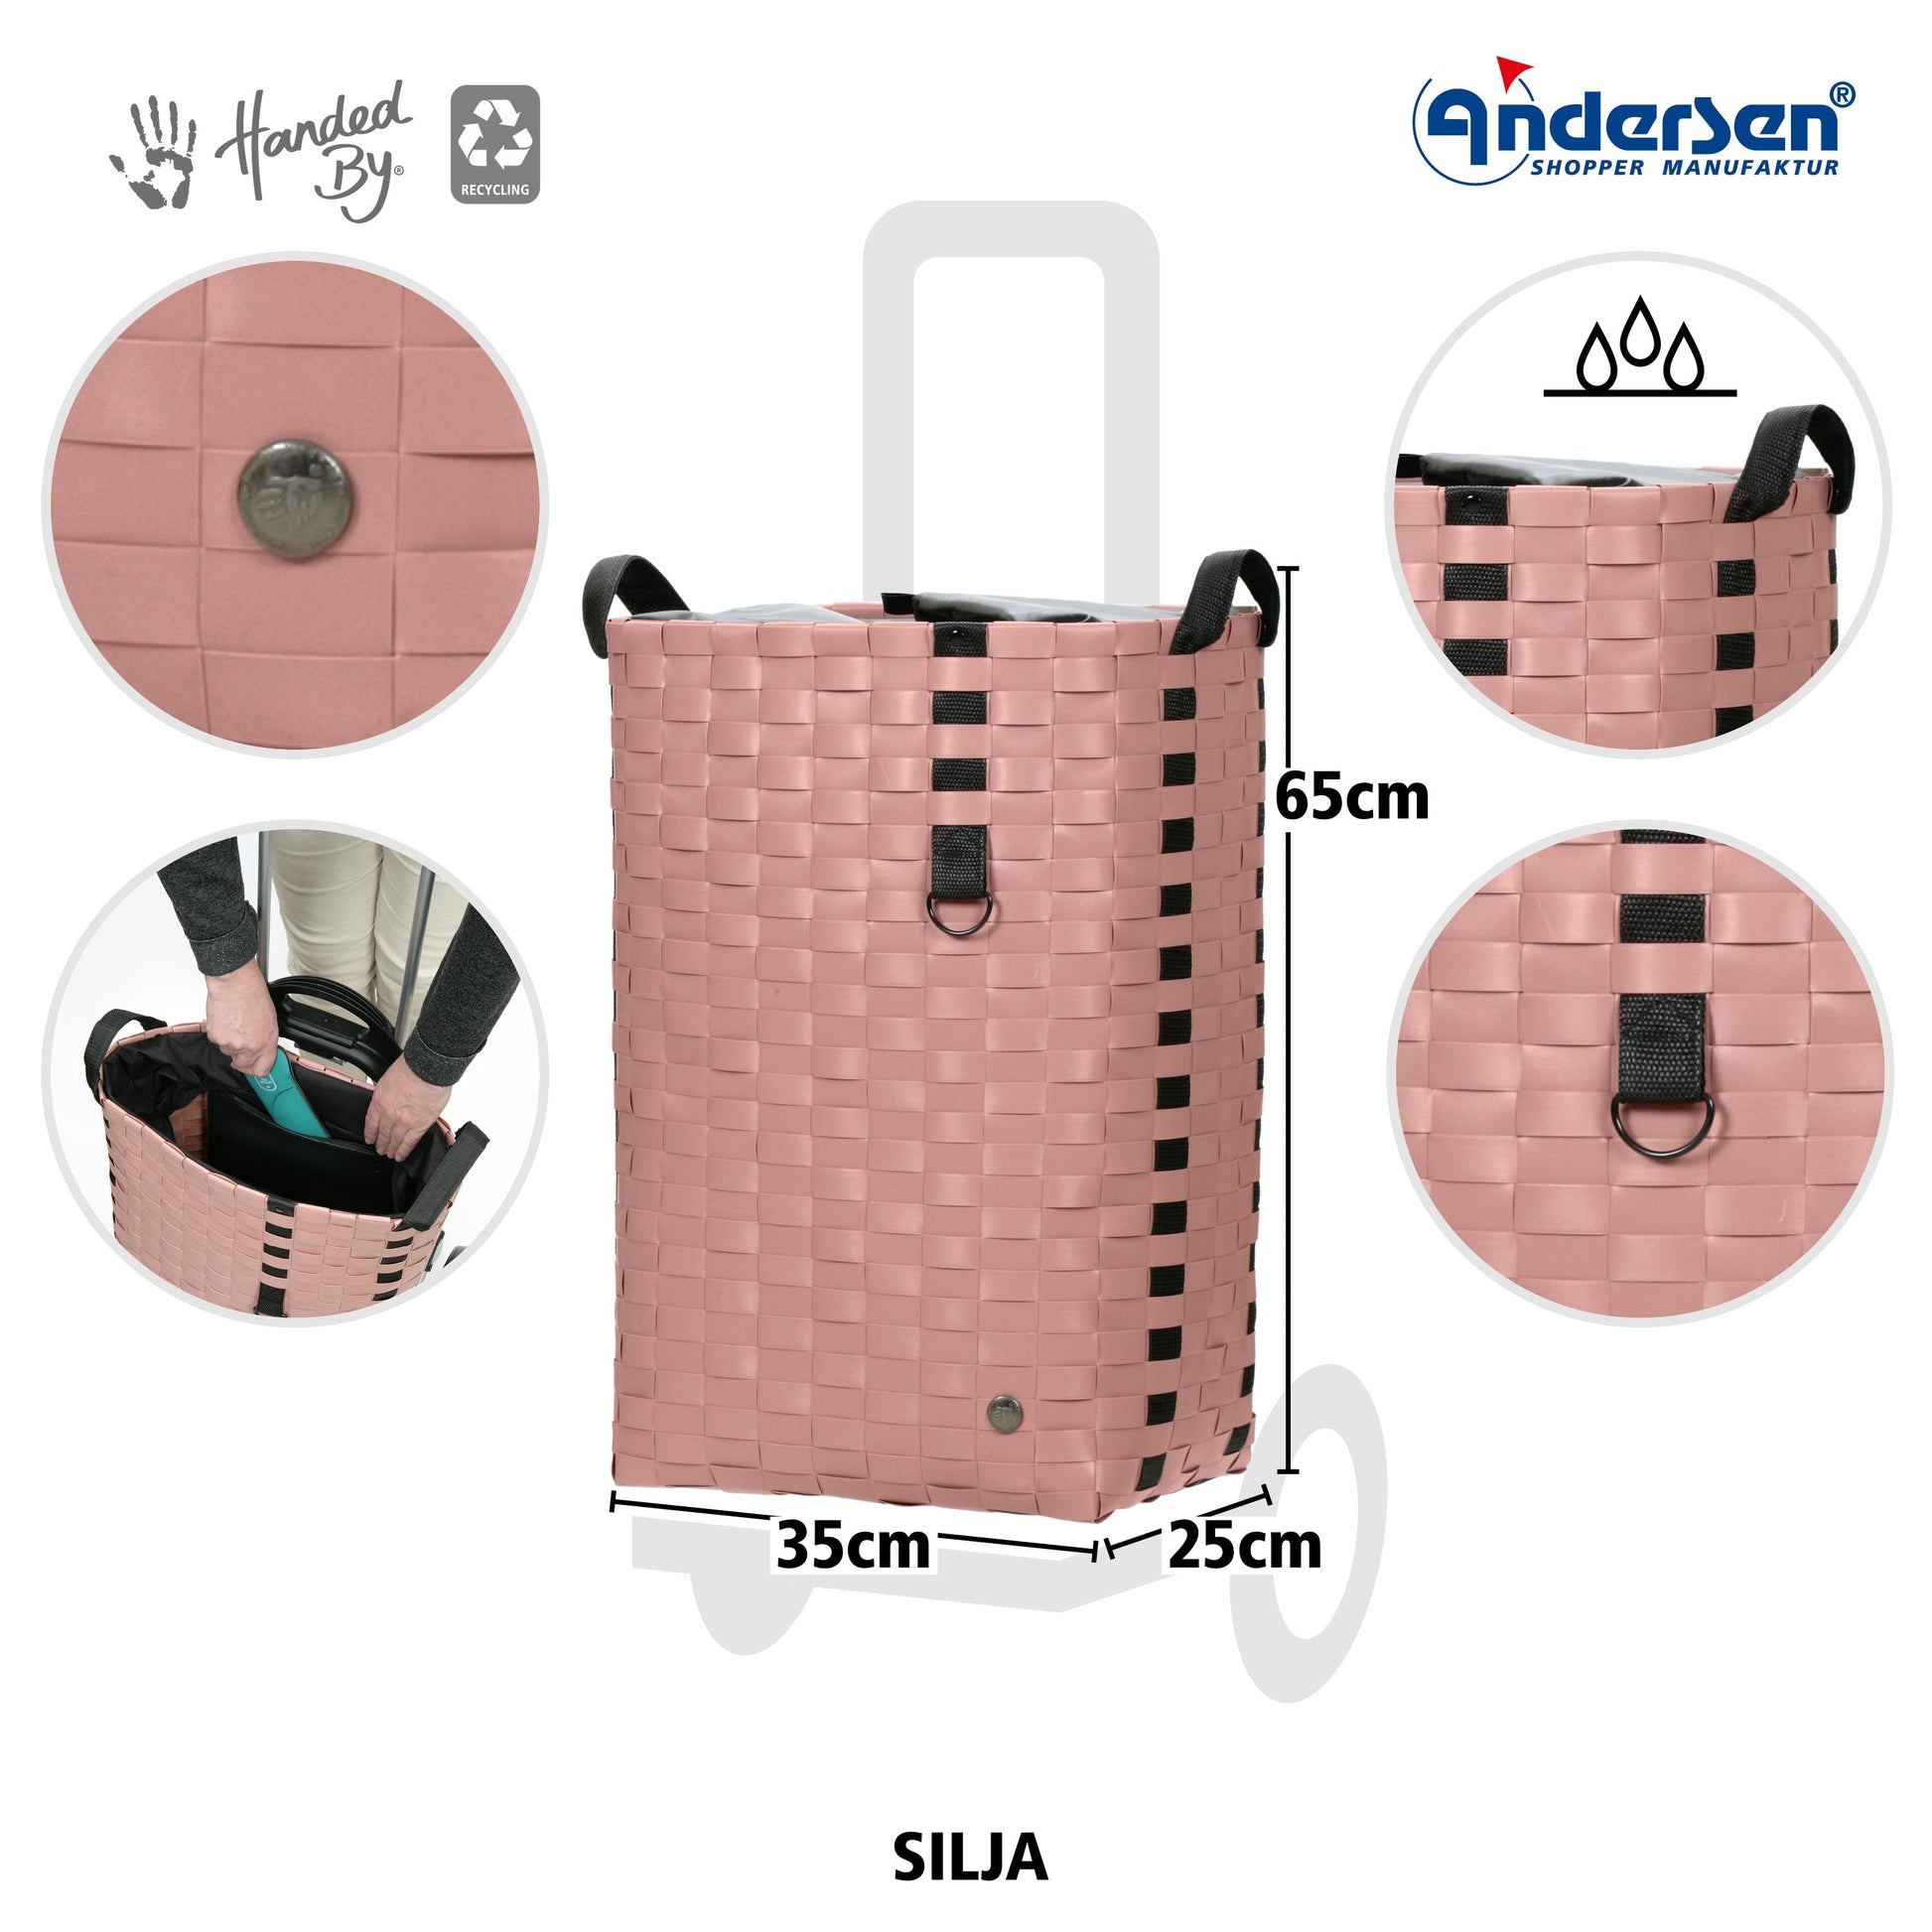 Andersen Shopper Manufaktur-Unus Shopper Silja terra pink-www.shopping-trolley.ch-bild4